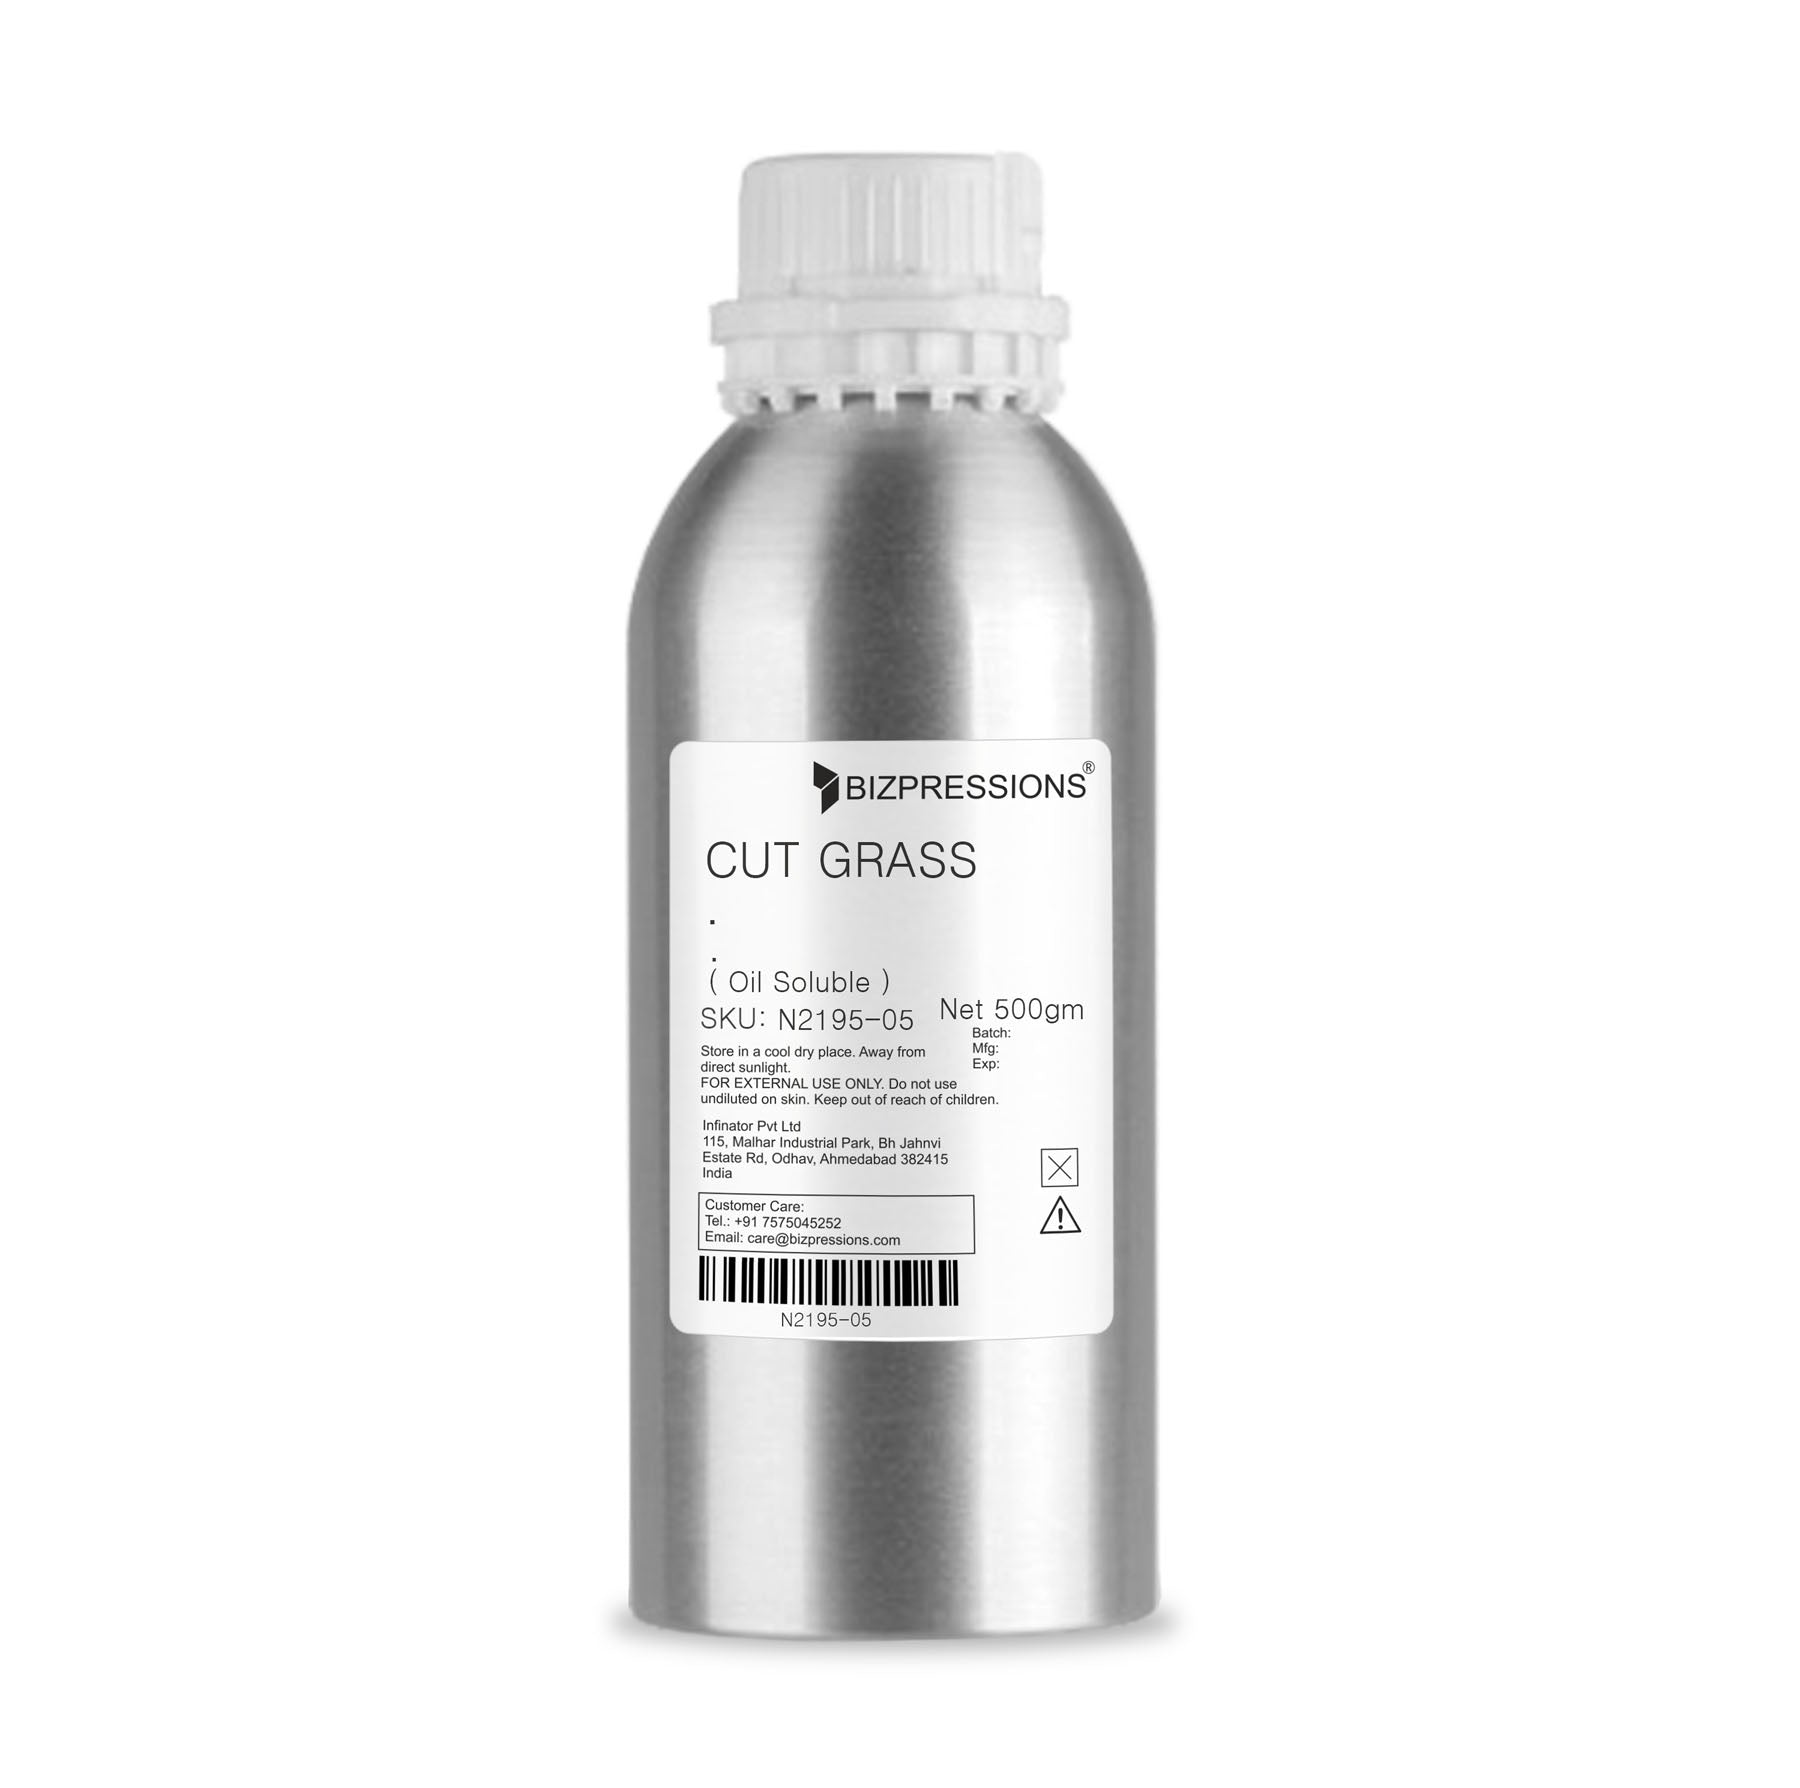 CUT GRASS - Fragrance ( Oil Soluble ) - 500 gm